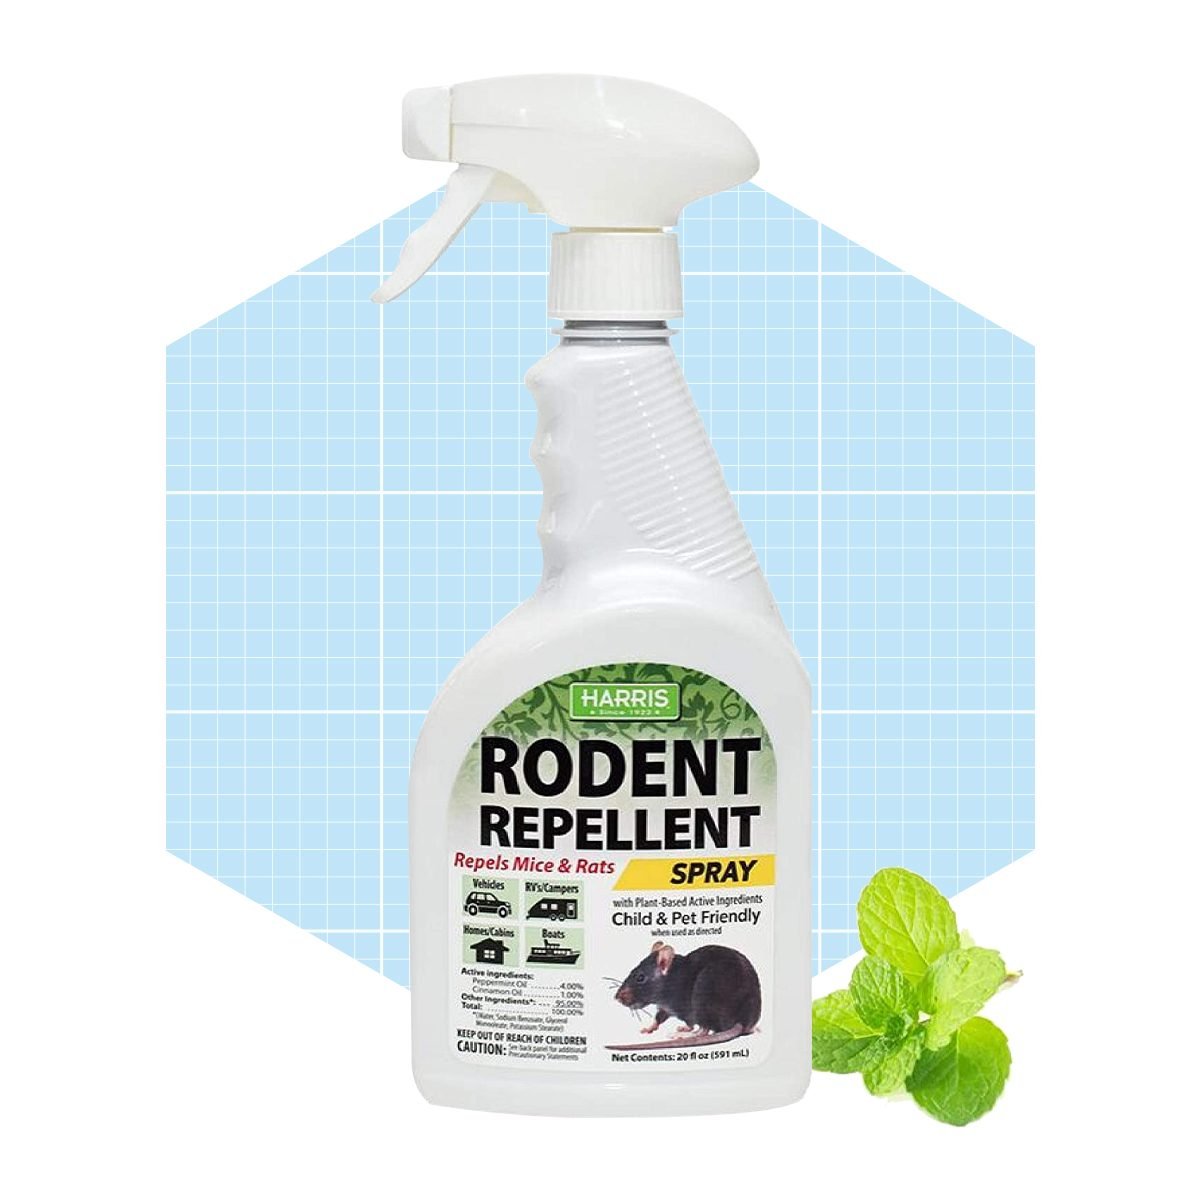 Harris Peppermint Oil Mice & Rodent Repellent Spray Ecomm Amazon.com